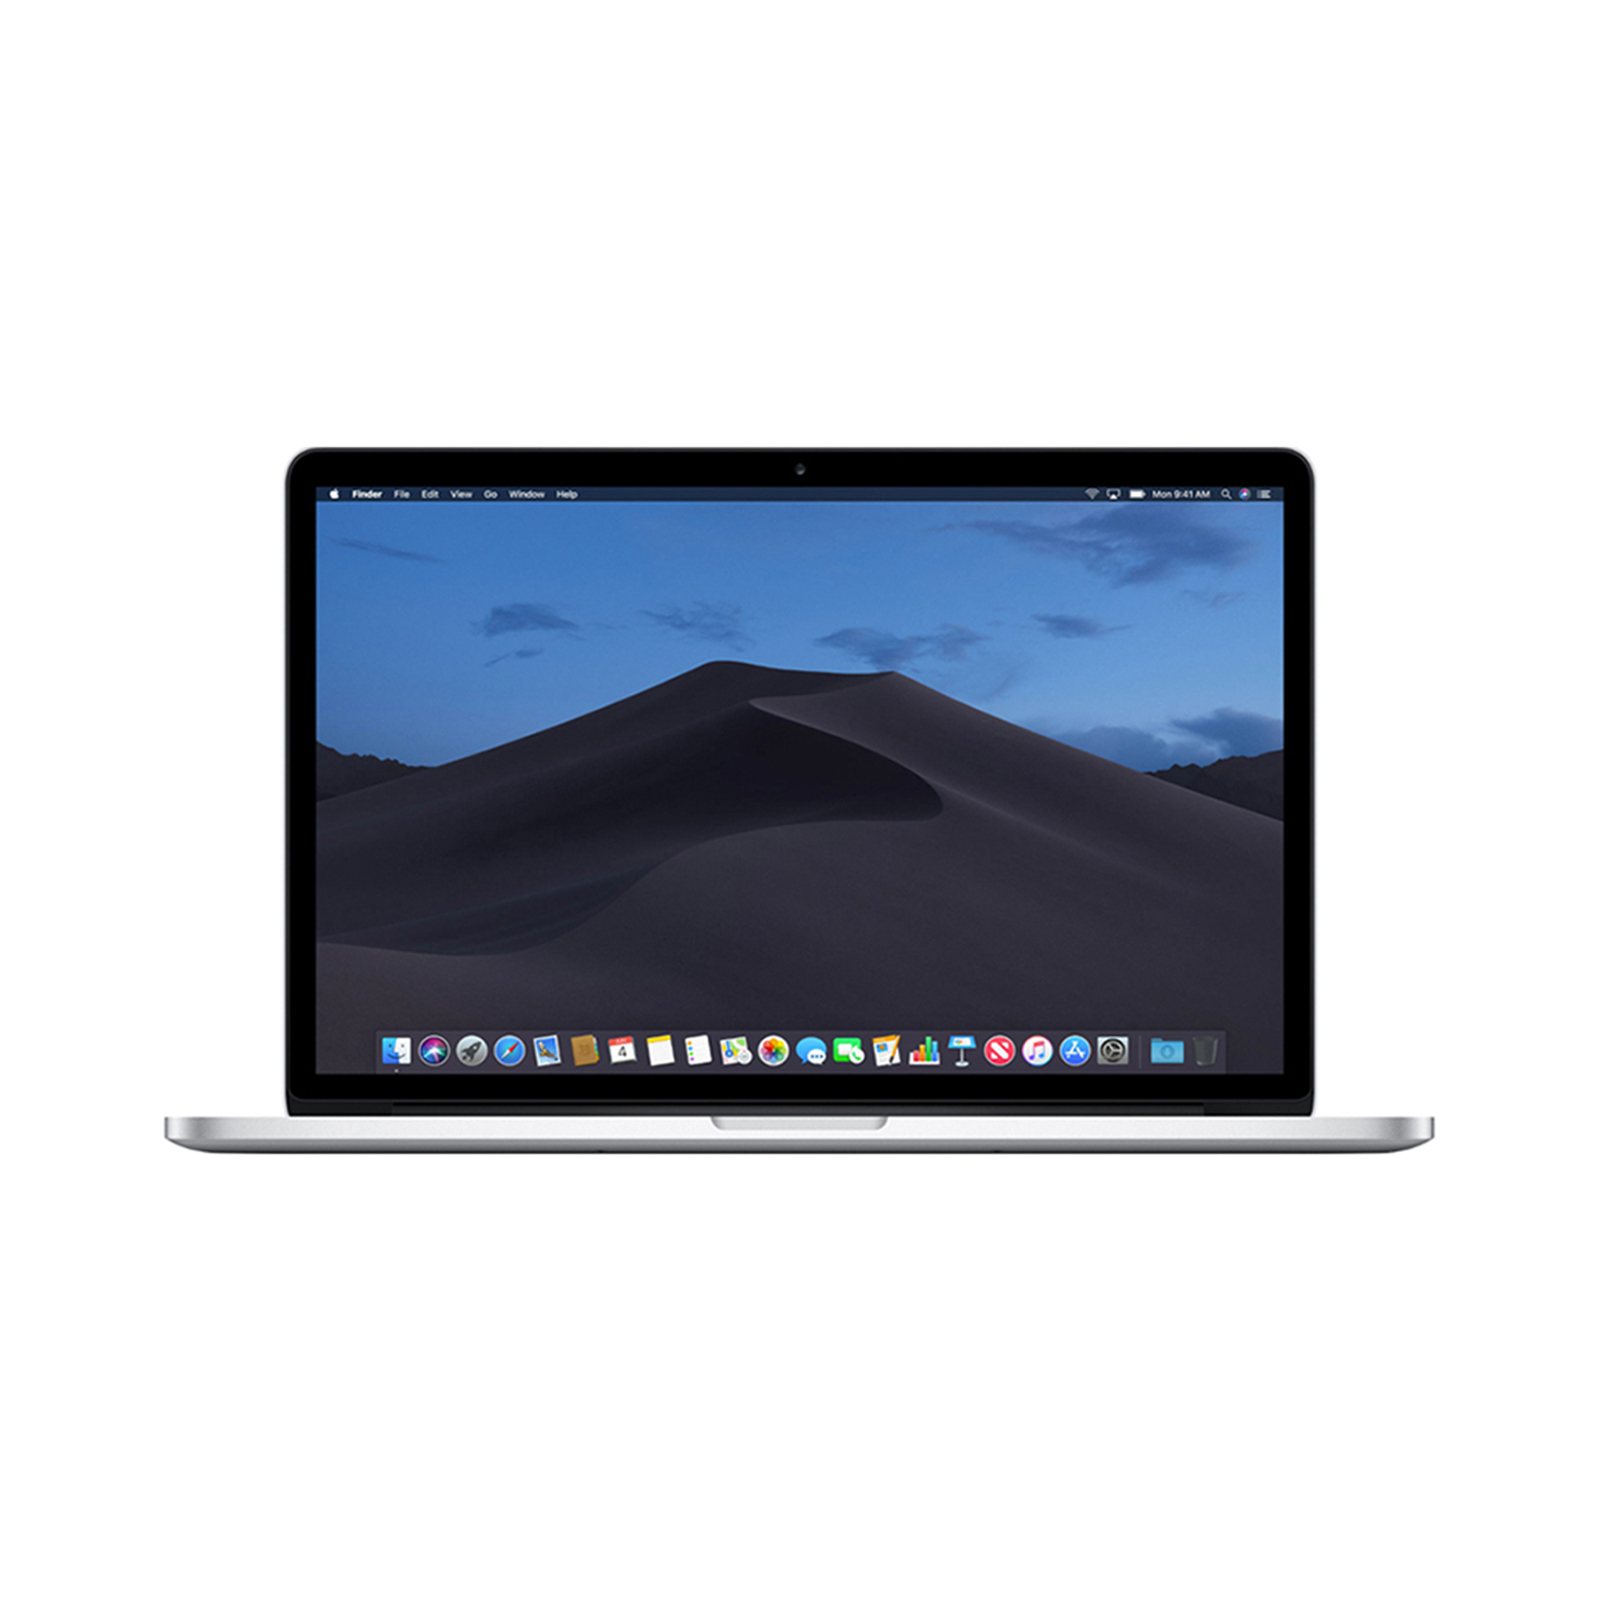 MacBook Pro (Retina, 13-inch, Early 2015) Intel Core i5 2.7 GHz 8GB